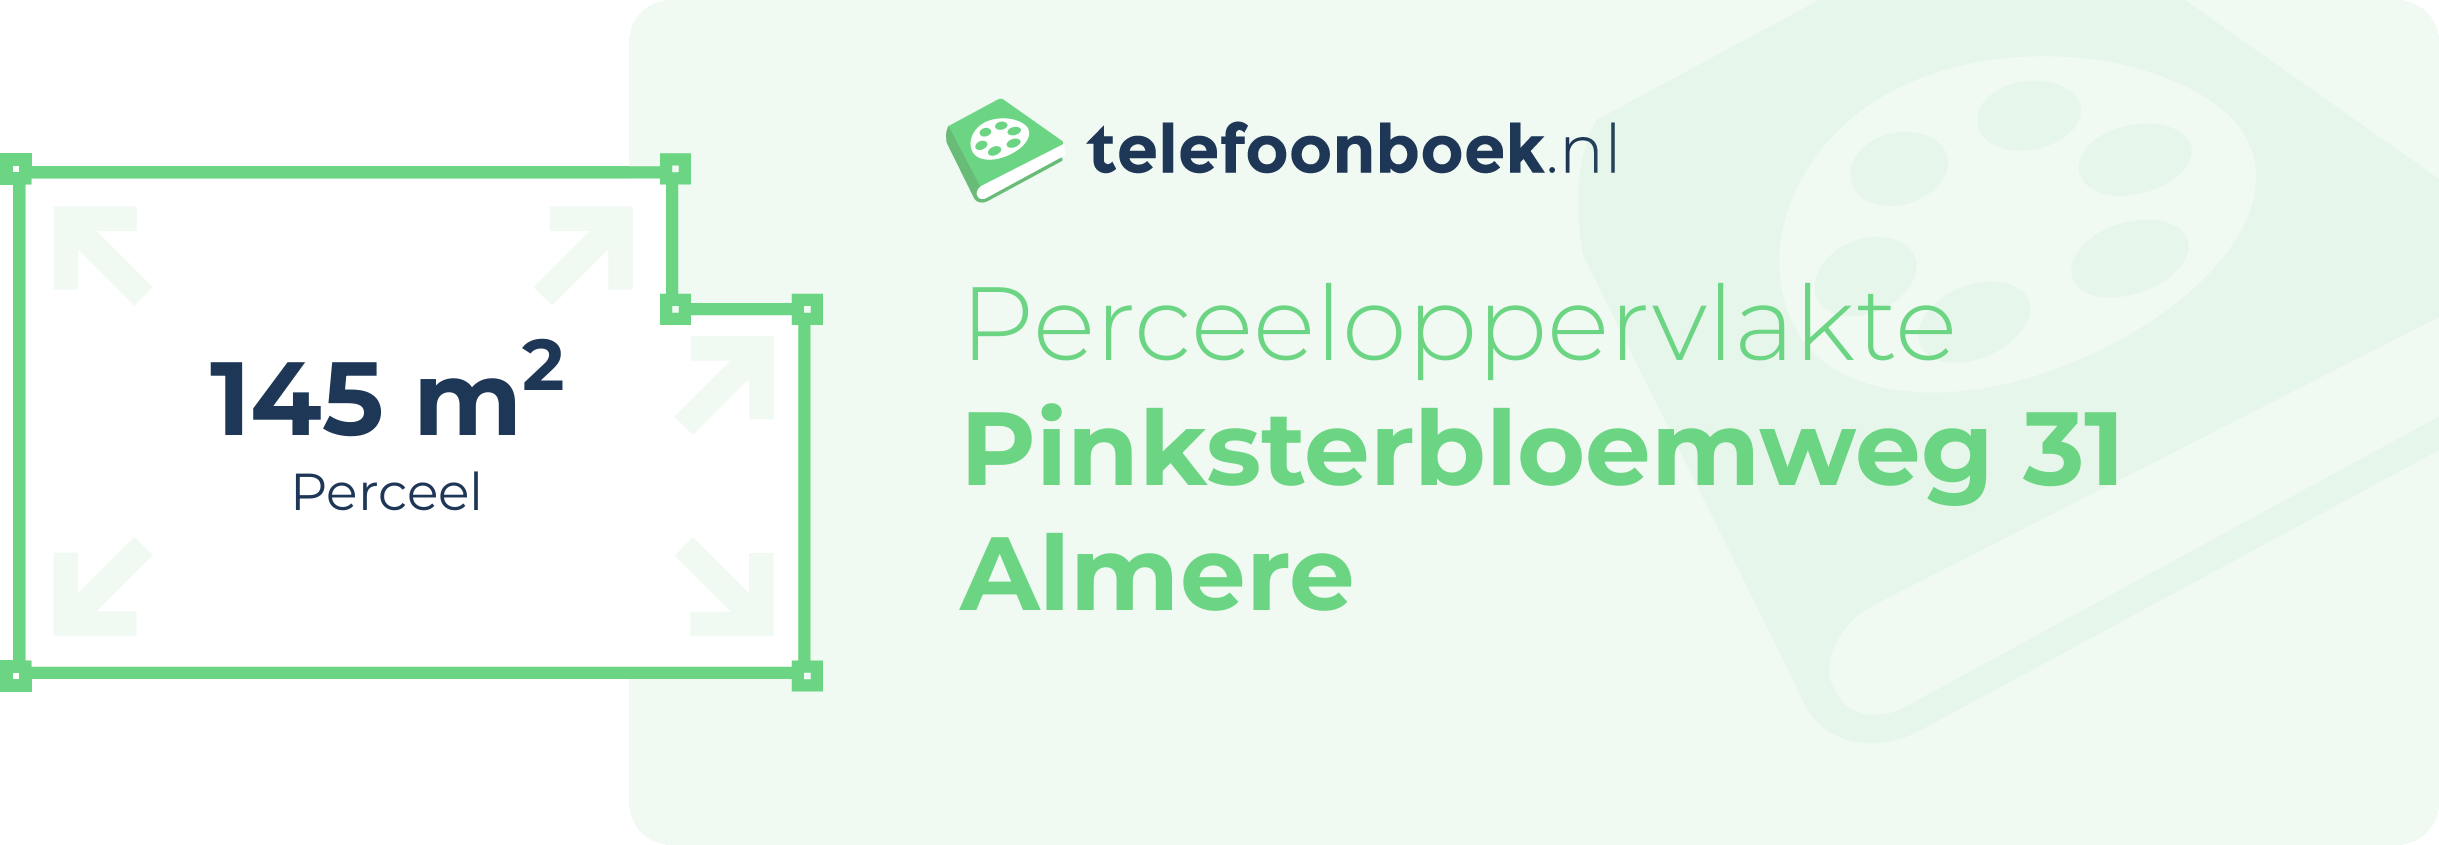 Perceeloppervlakte Pinksterbloemweg 31 Almere